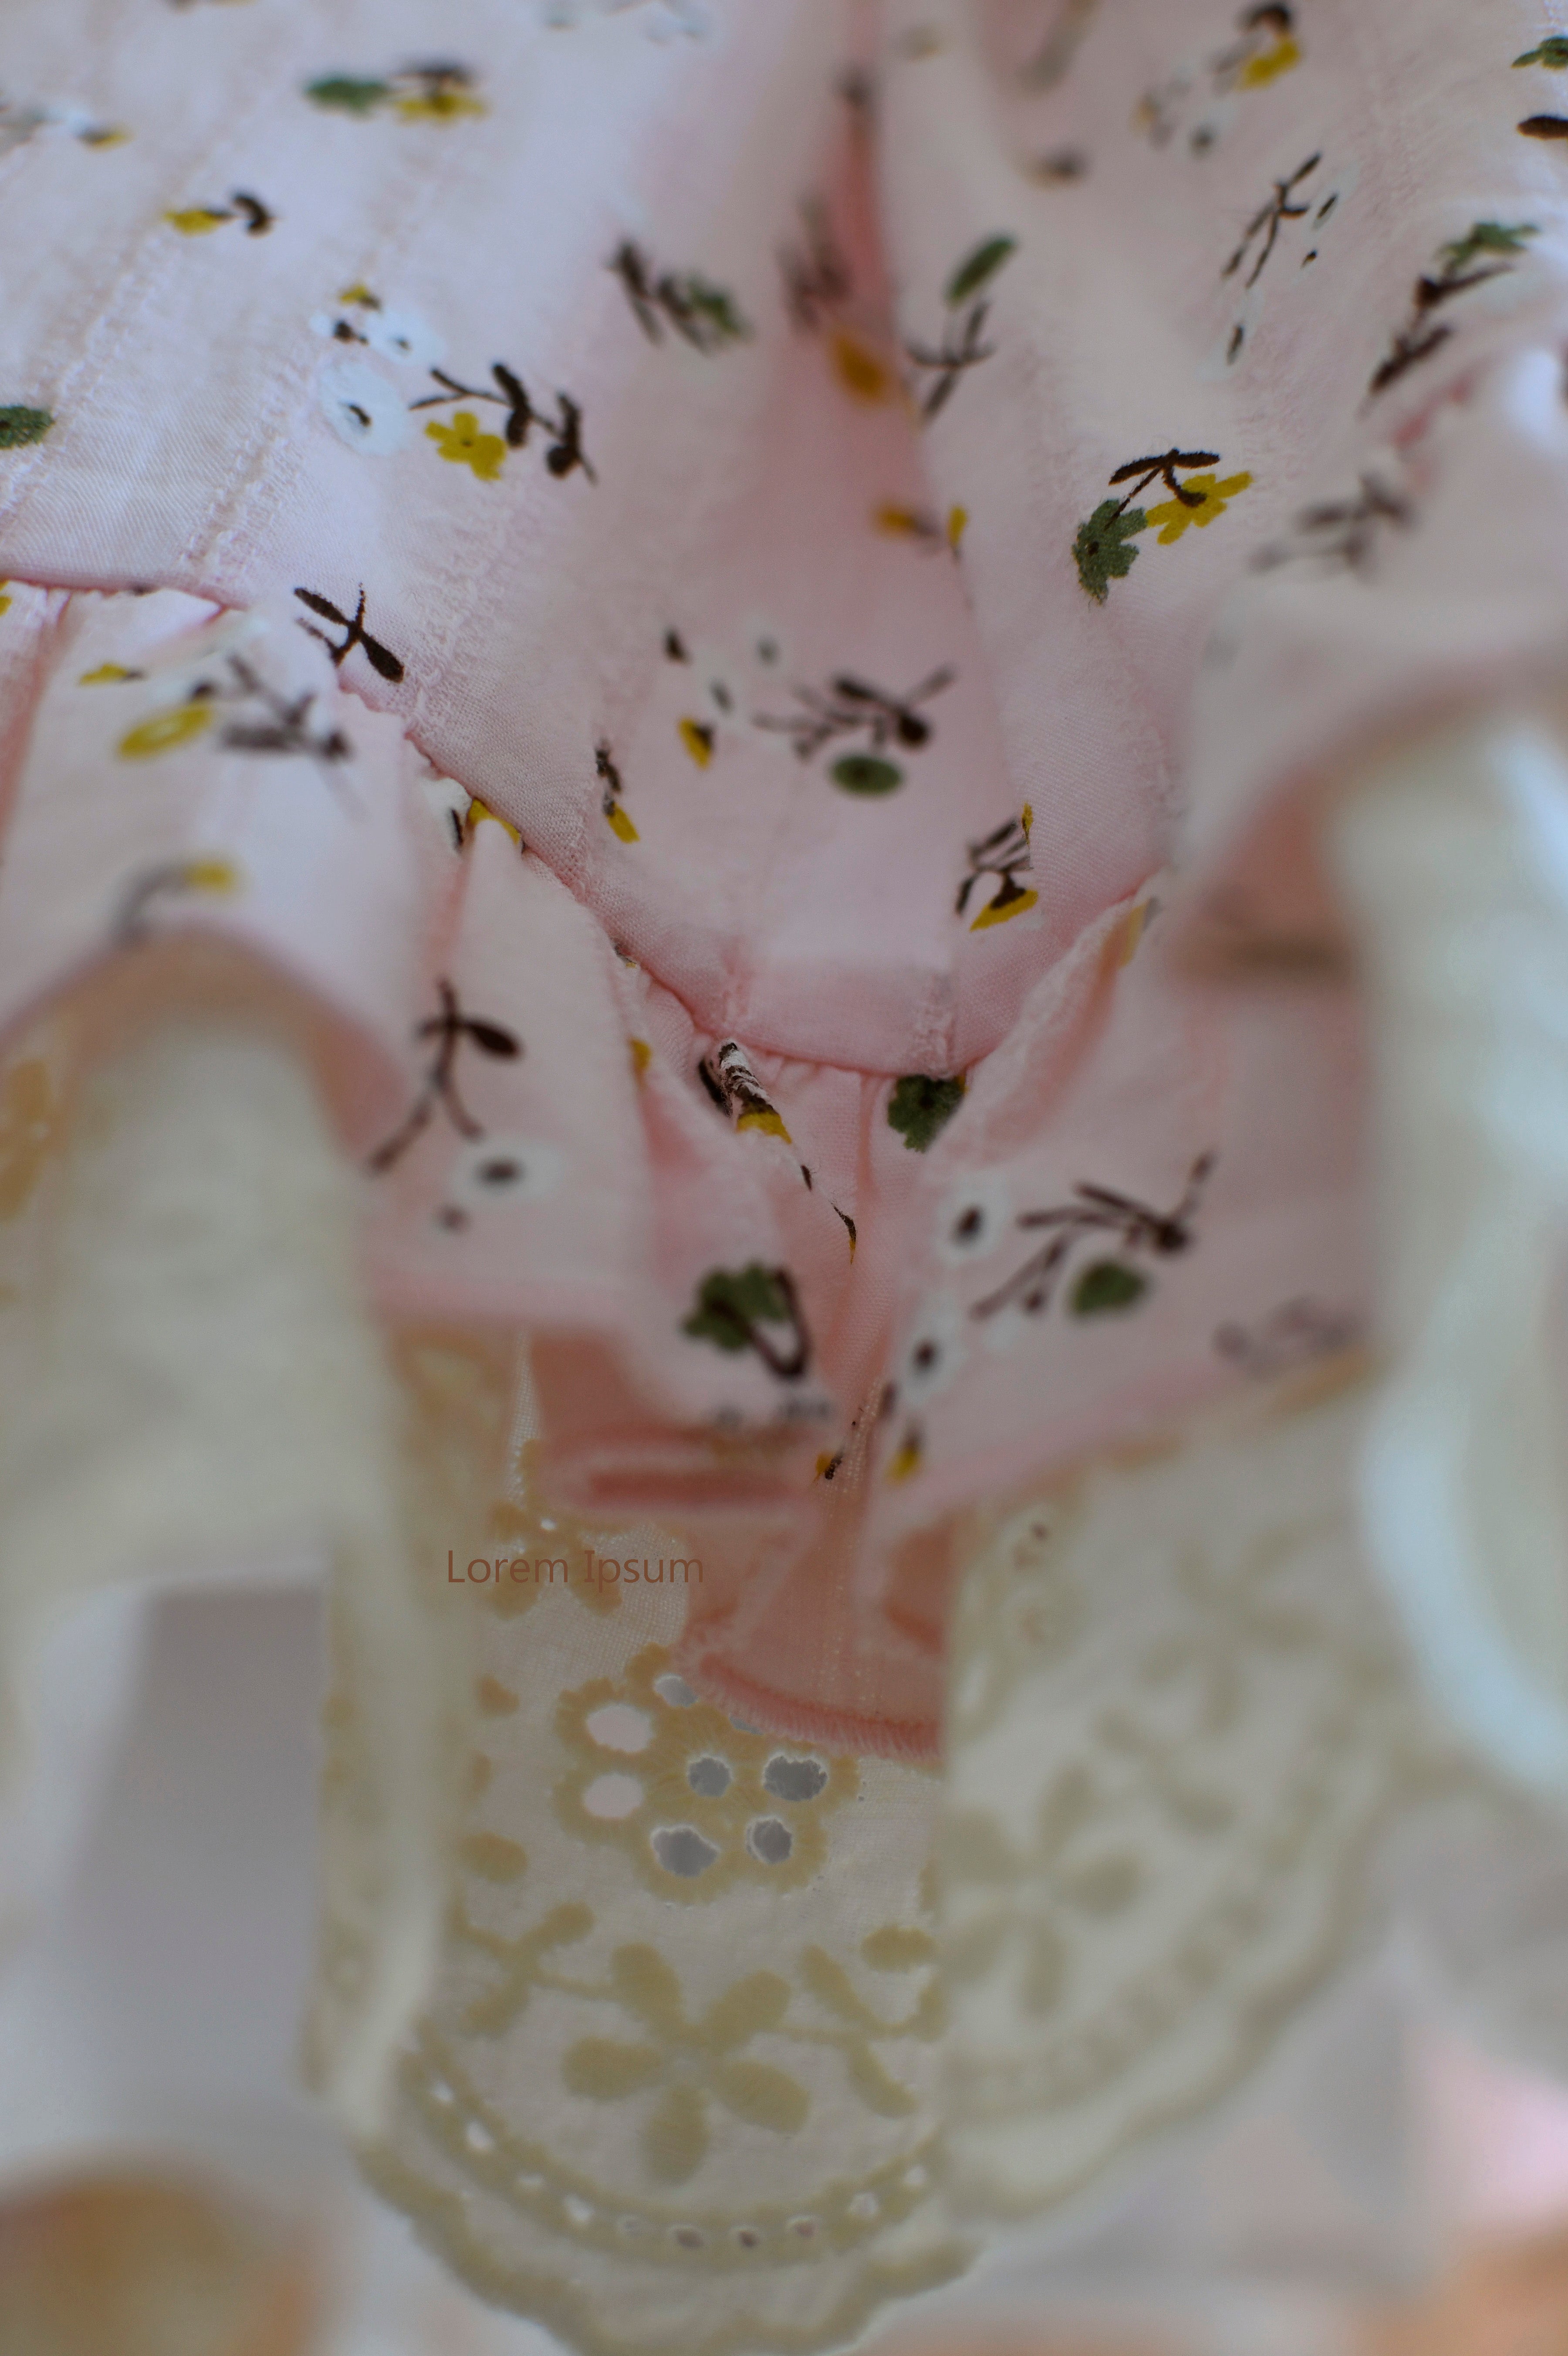 Garden Affair Vintage Inspired Dress -Set includes Dress, Bow, detachable apron